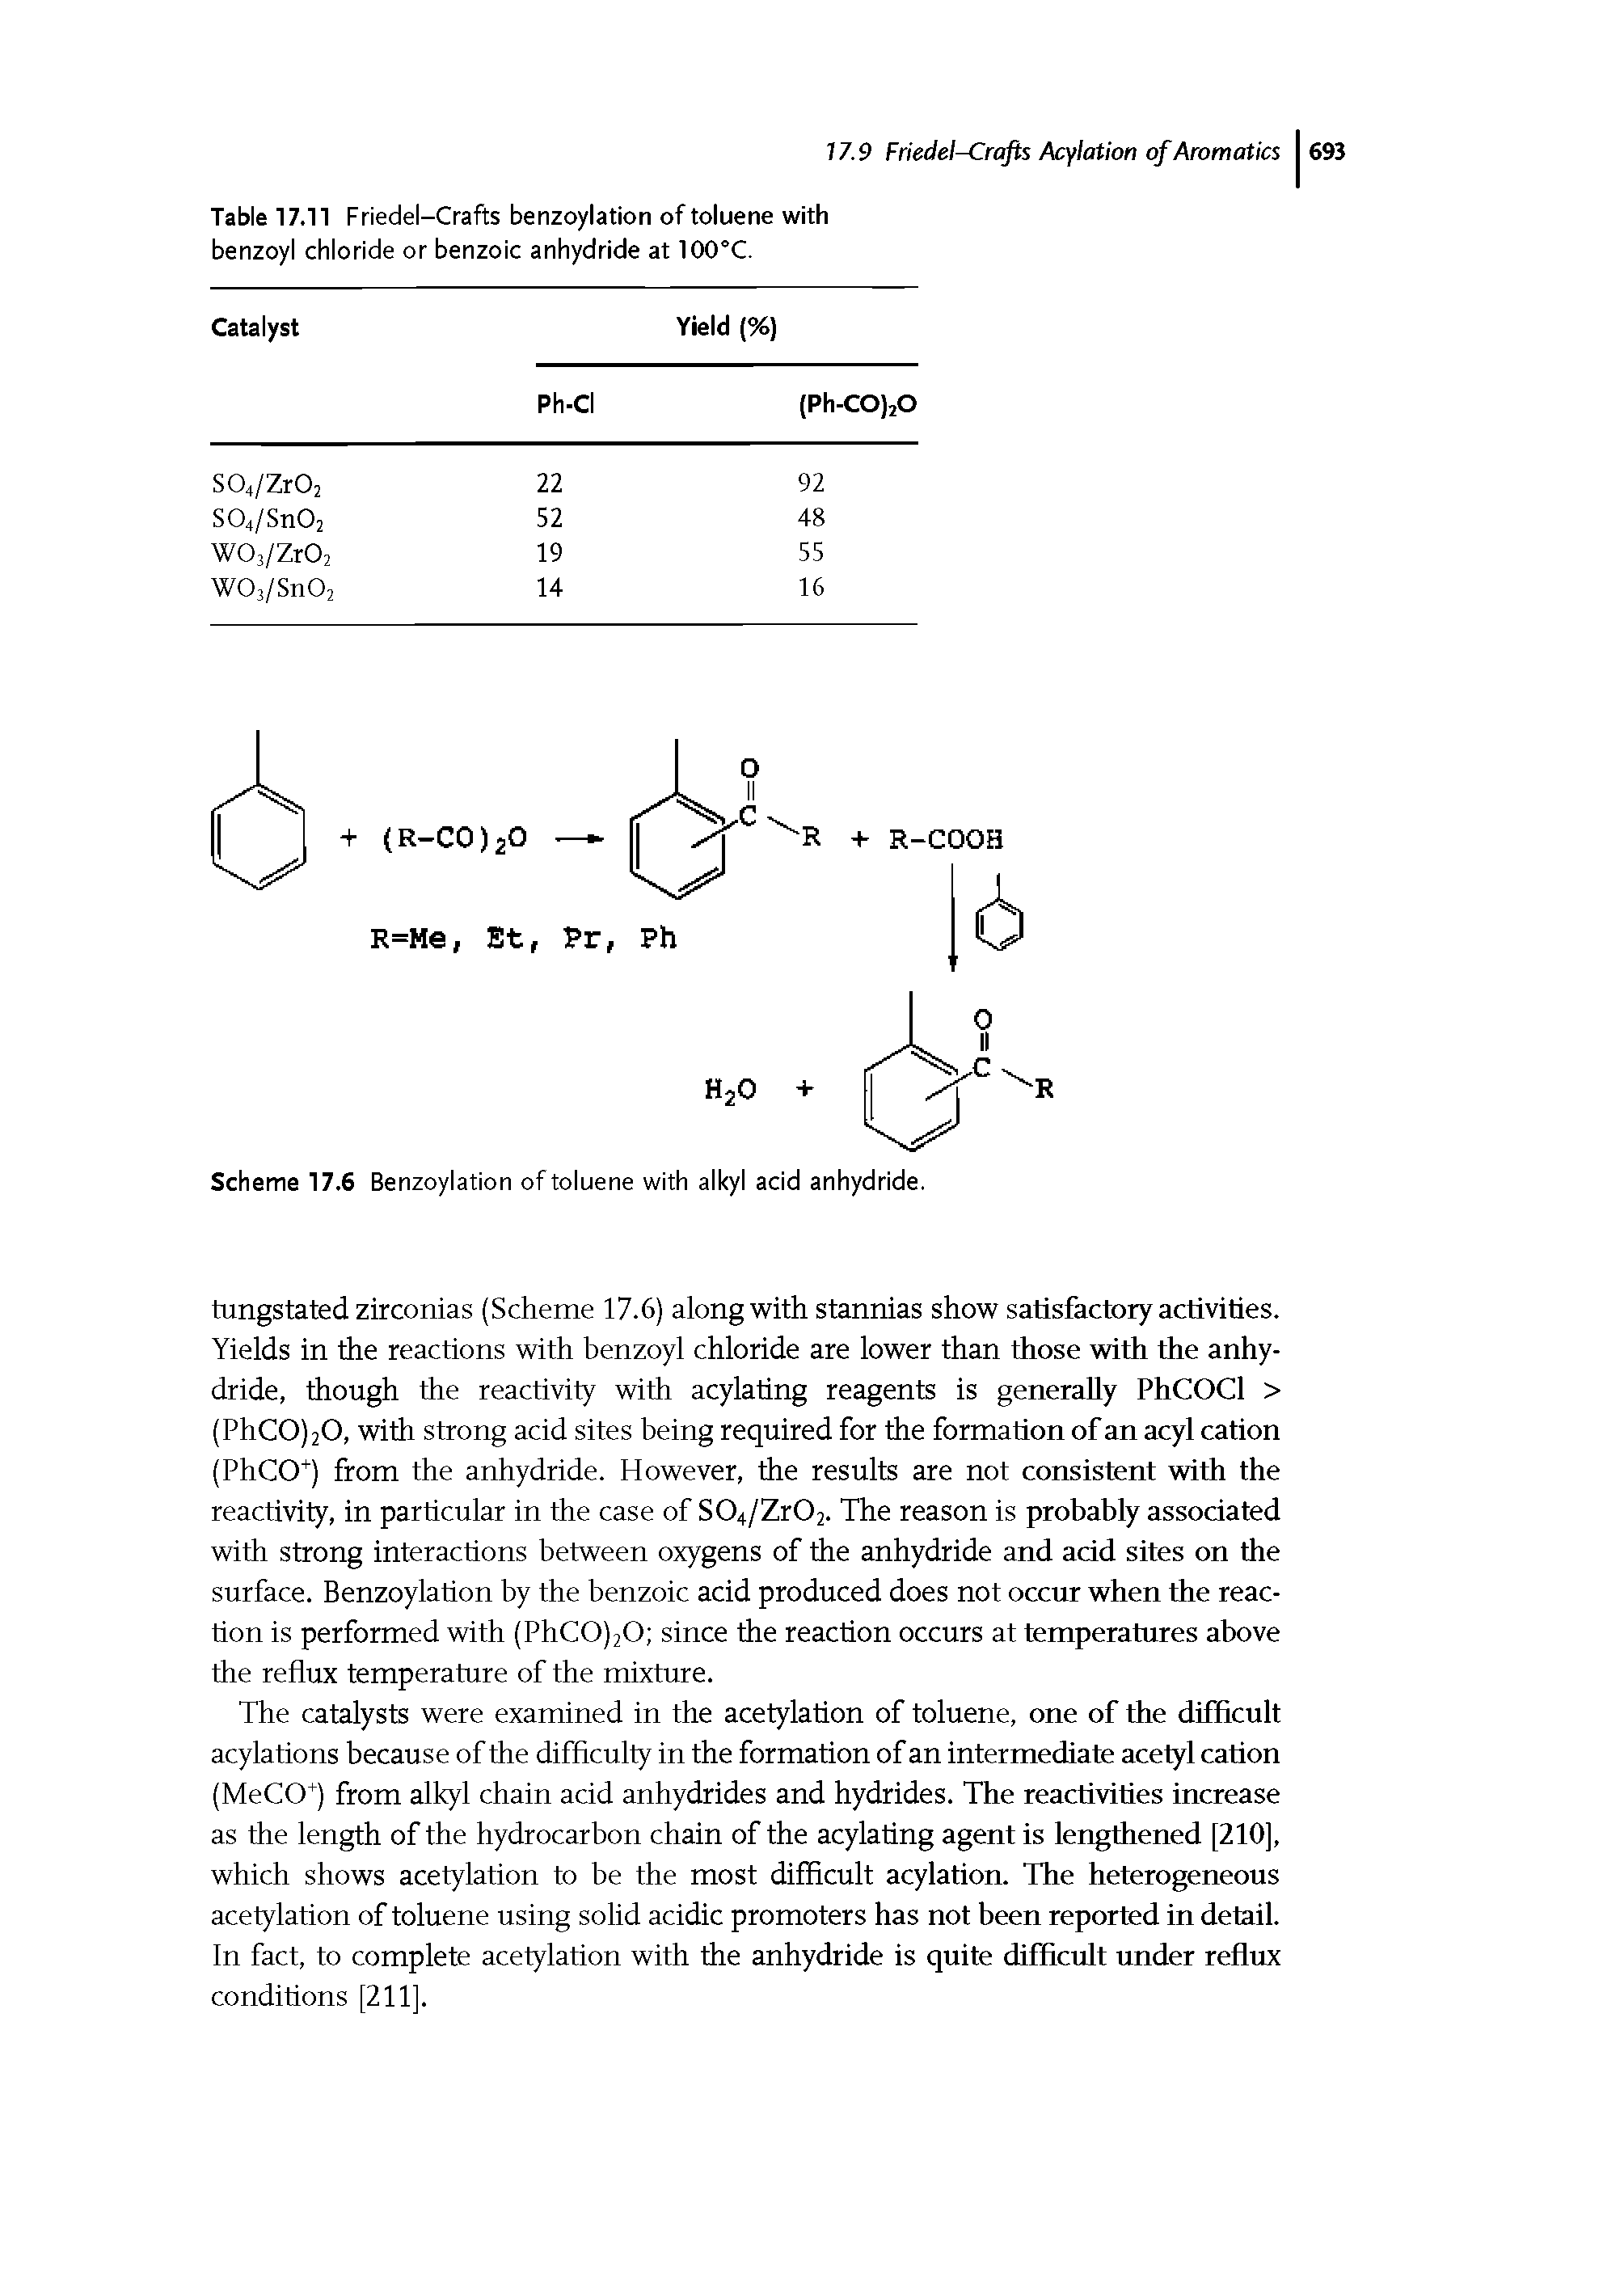 Scheme 17.6 Benzoylation of toluene with alkyl acid anhydride.